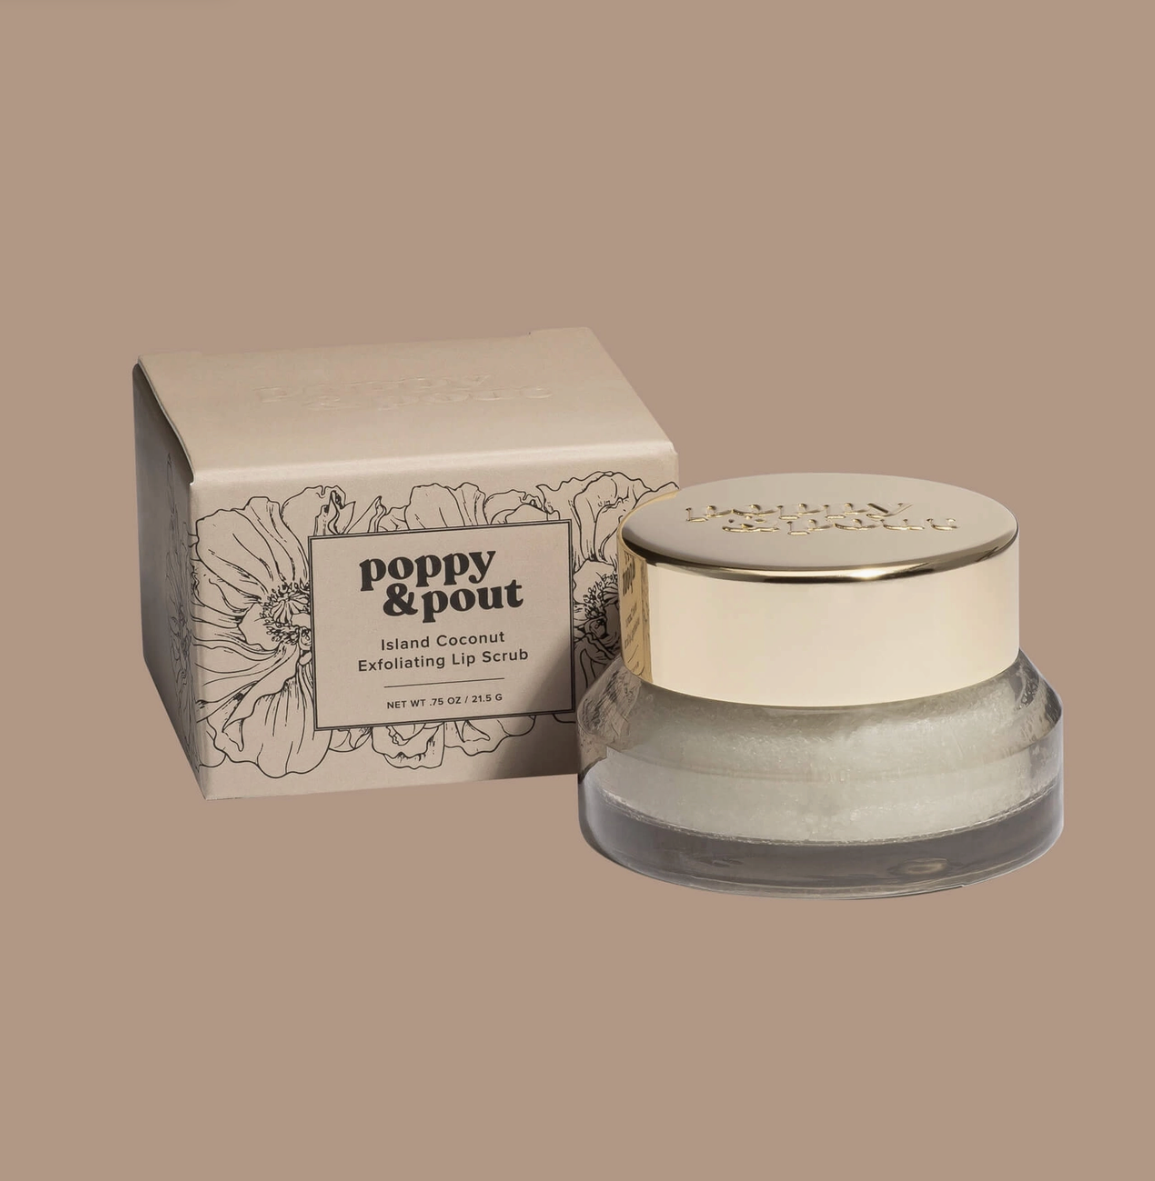 Poppy & Pout's Exfoliating Lip Scrubs Coconut